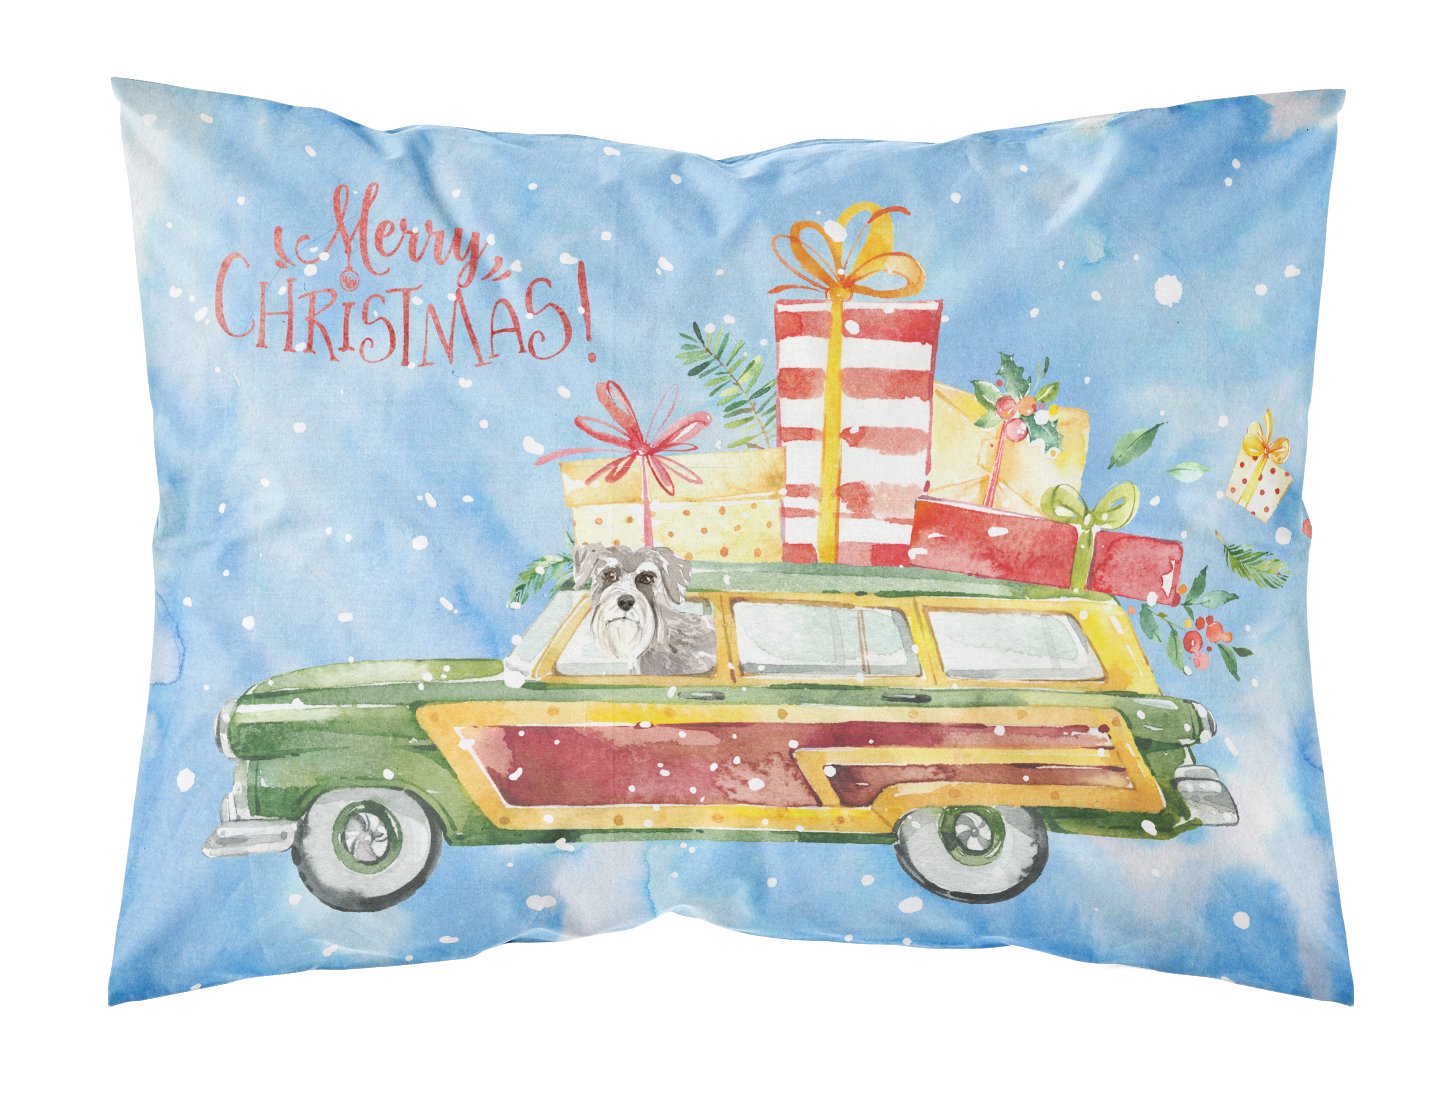 Merry Christmas Schnauzer #2 Fabric Standard Pillowcase CK2419PILLOWCASE by Caroline's Treasures